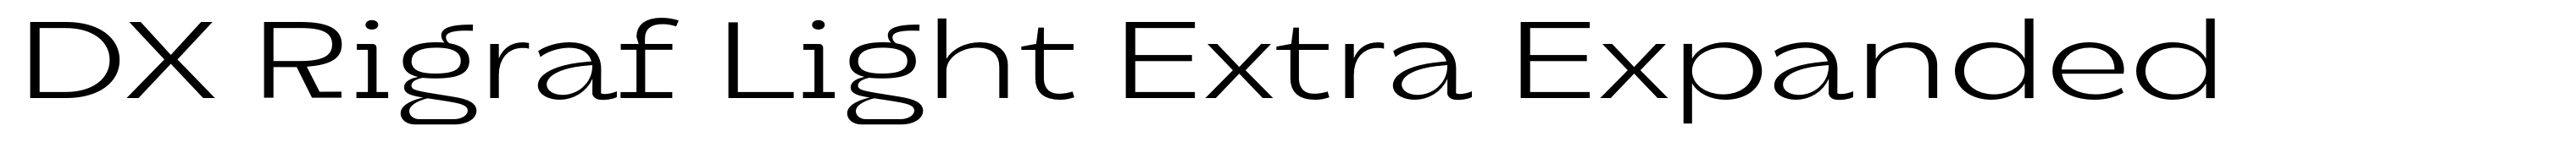 DX Rigraf Light Extra Expanded